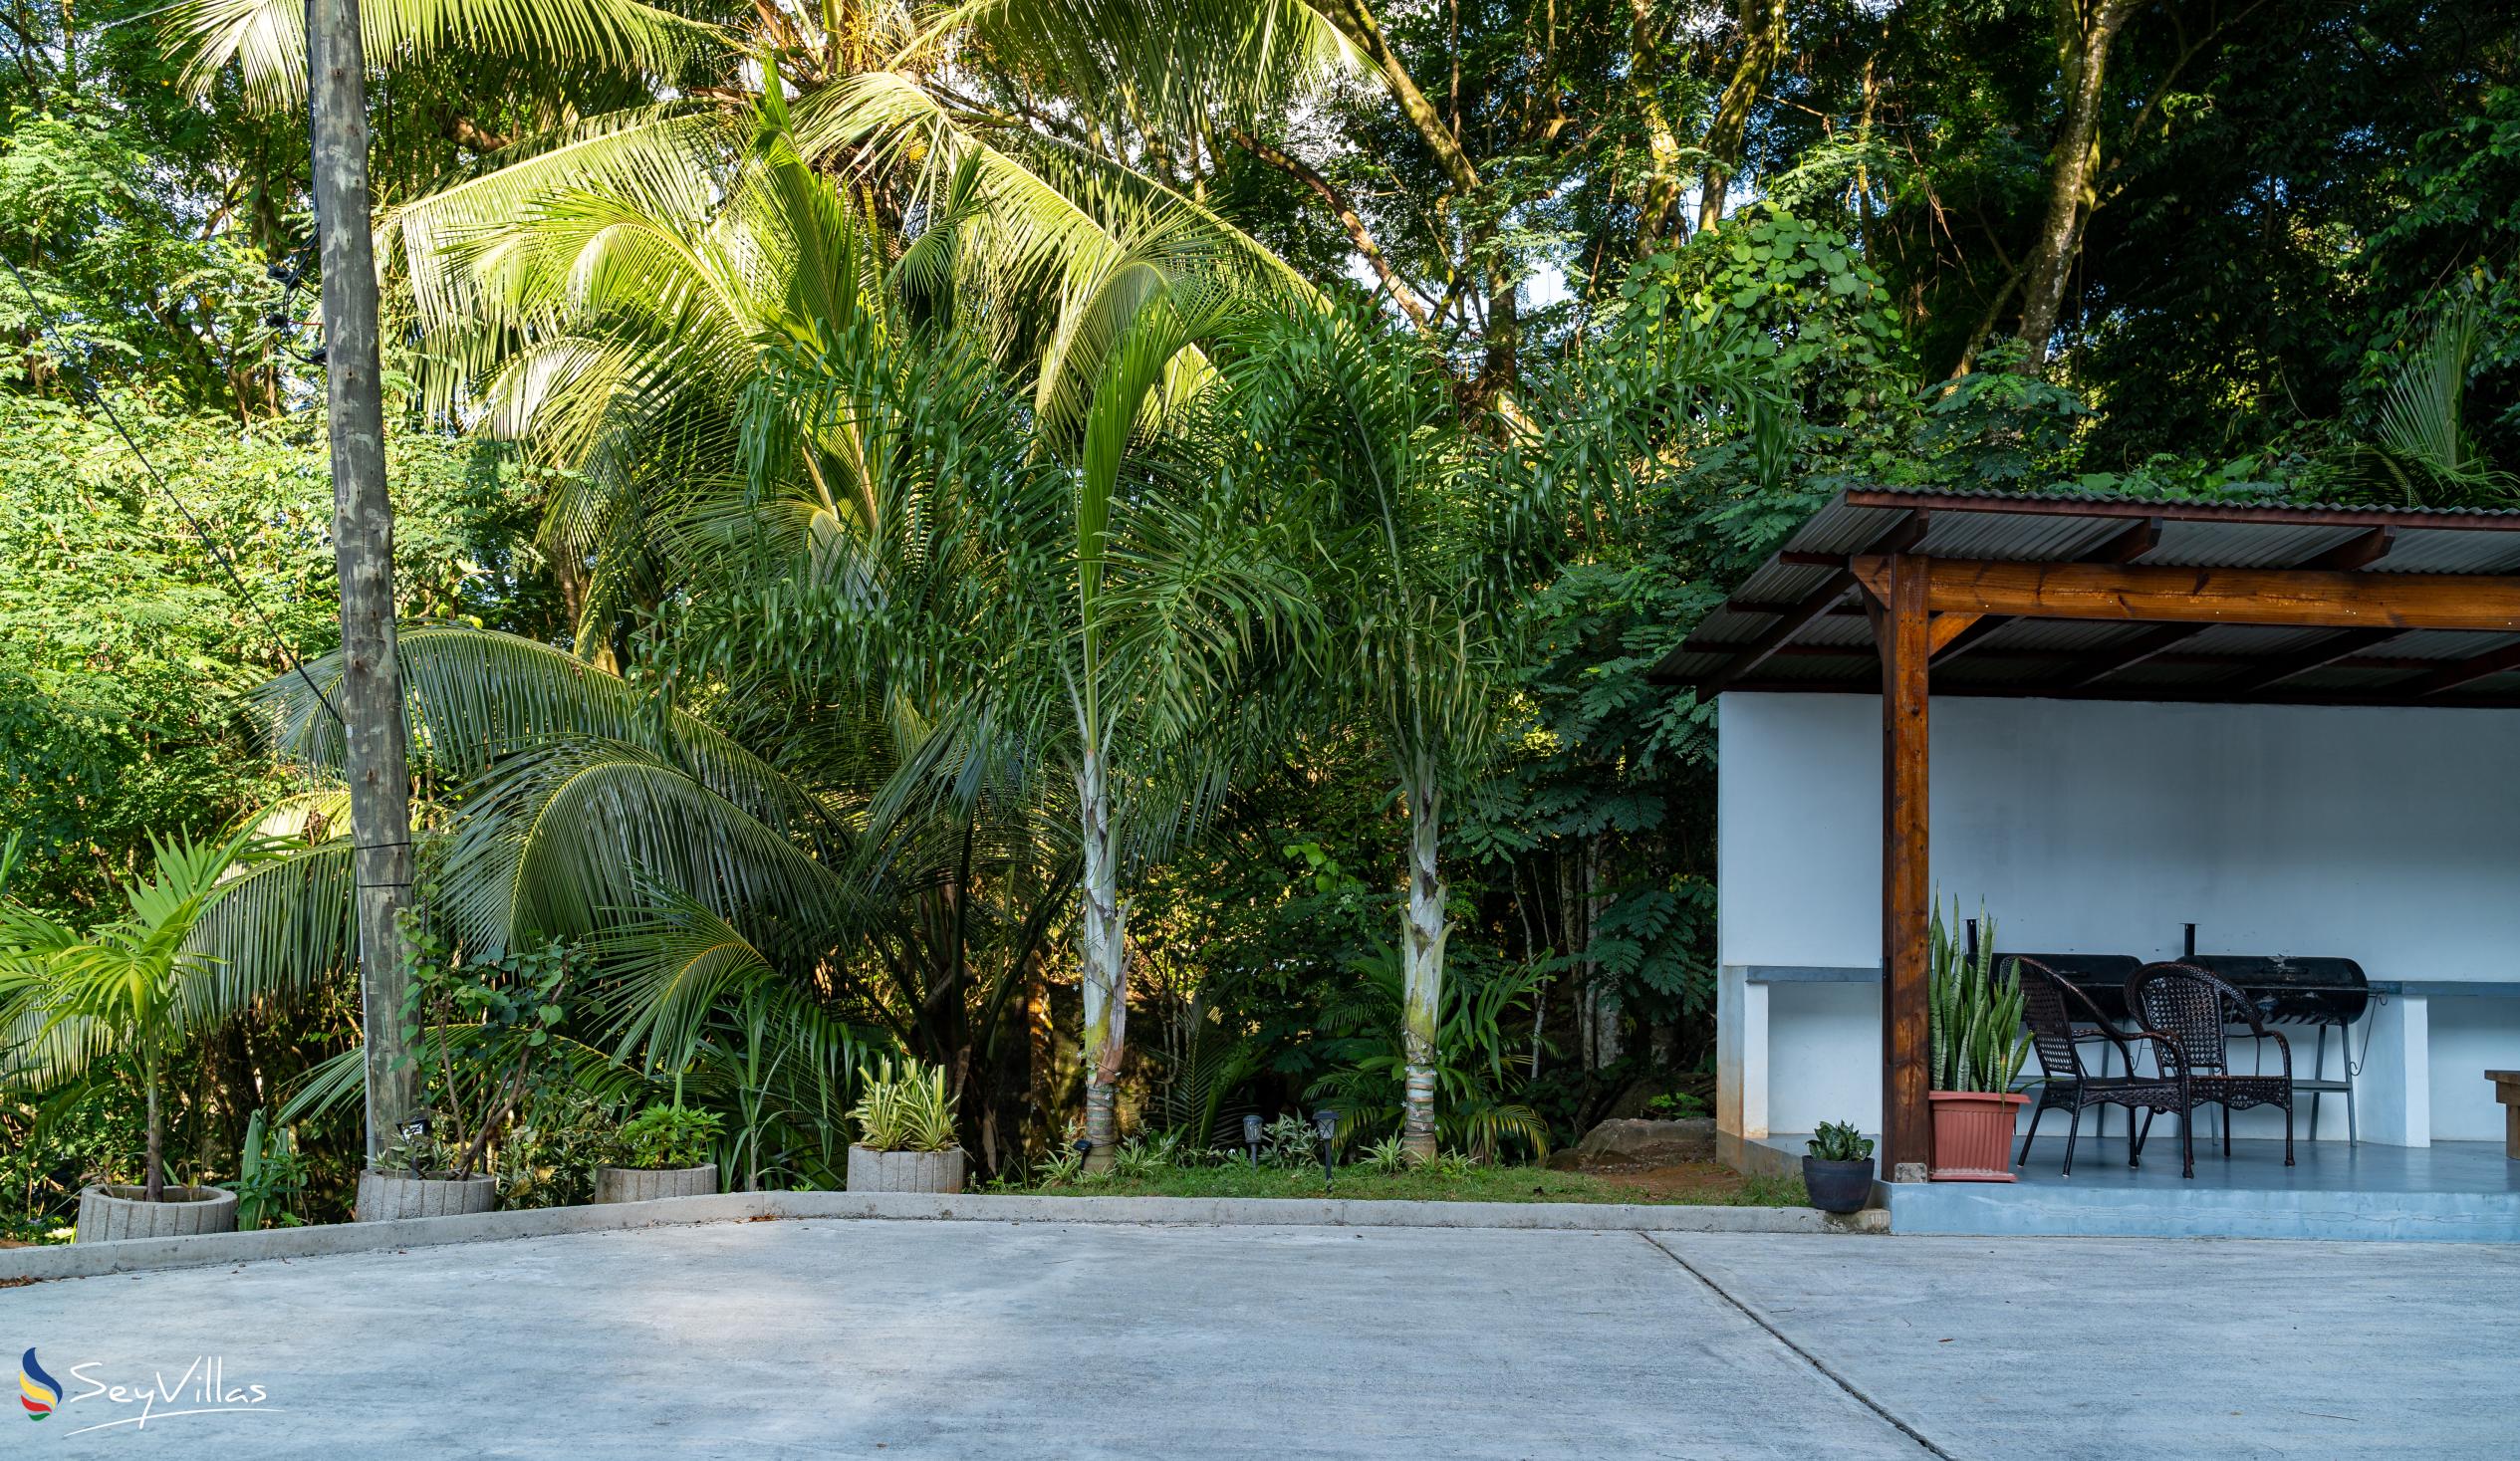 Photo 55: Kanasuk Self Catering Apartments - Outdoor area - Mahé (Seychelles)